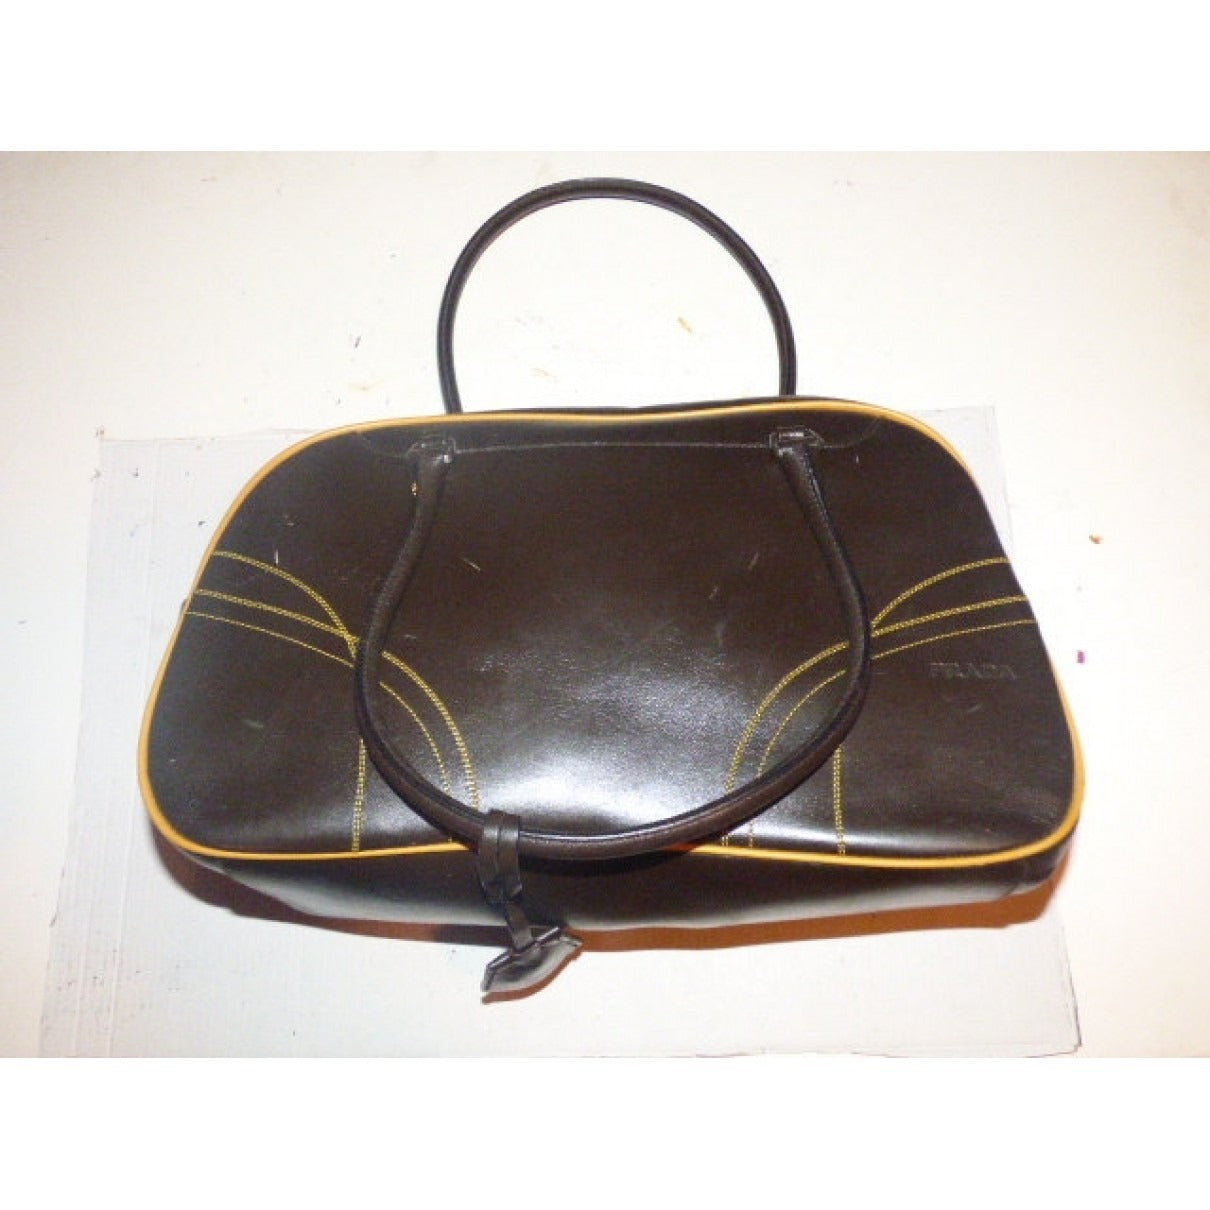 Prada 1990's brown leather bowling bag